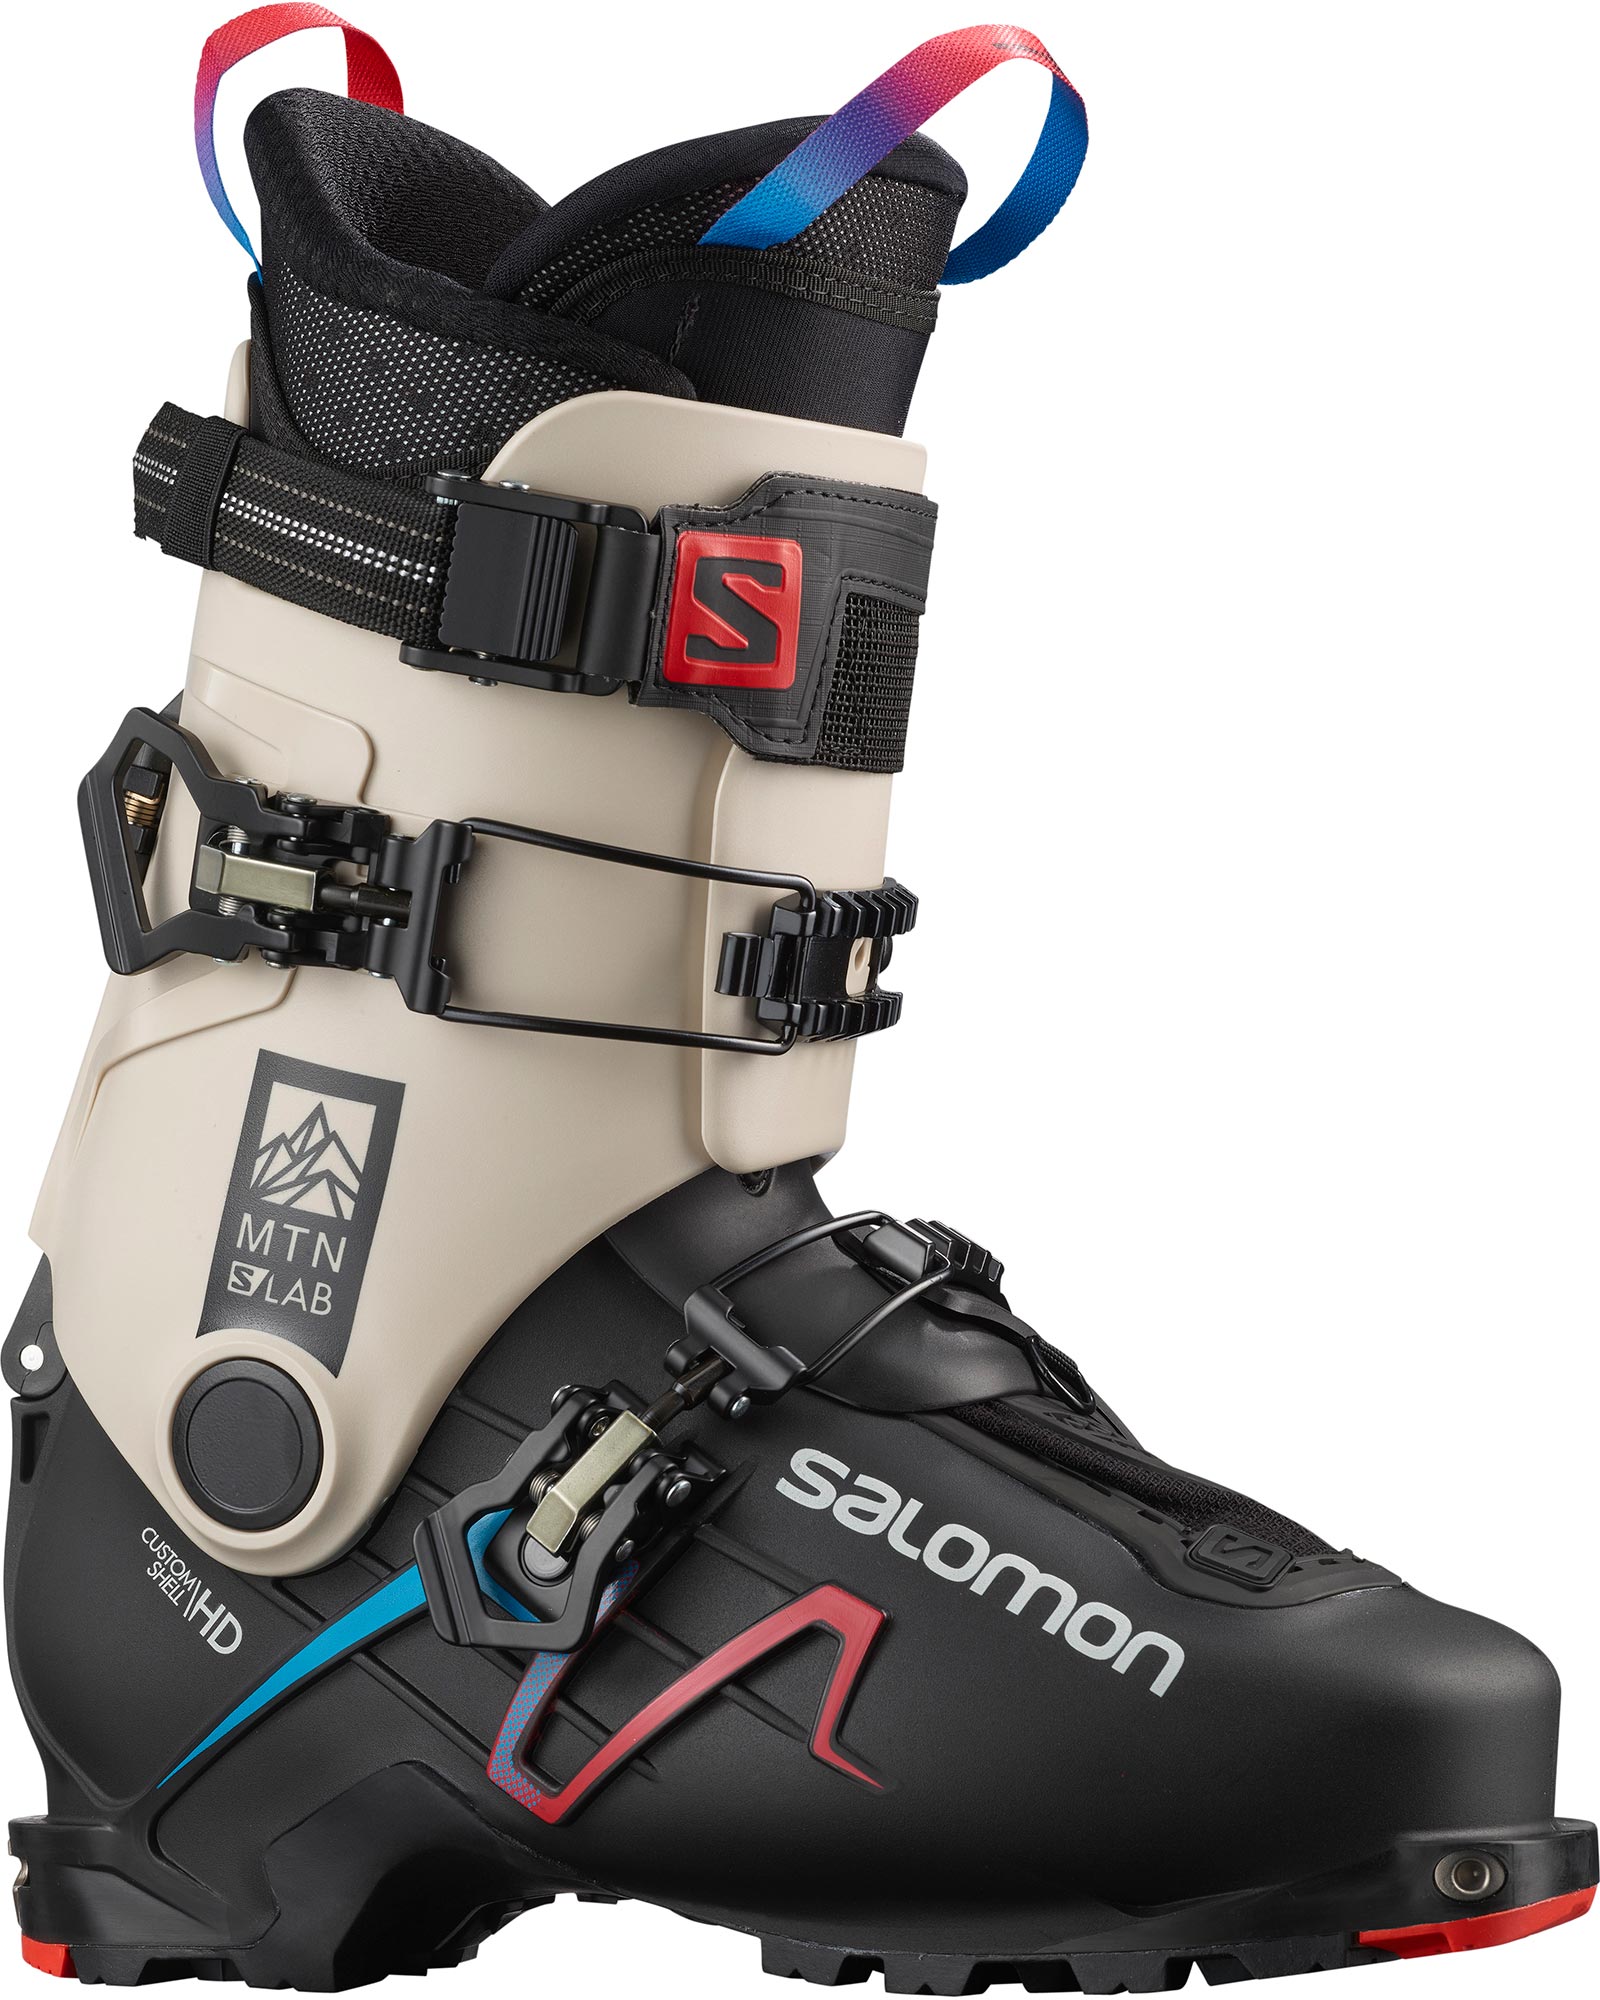 Salomon S/LAB MTN Ski Boots 2023 - Black/Rainy/Red MP 28.5